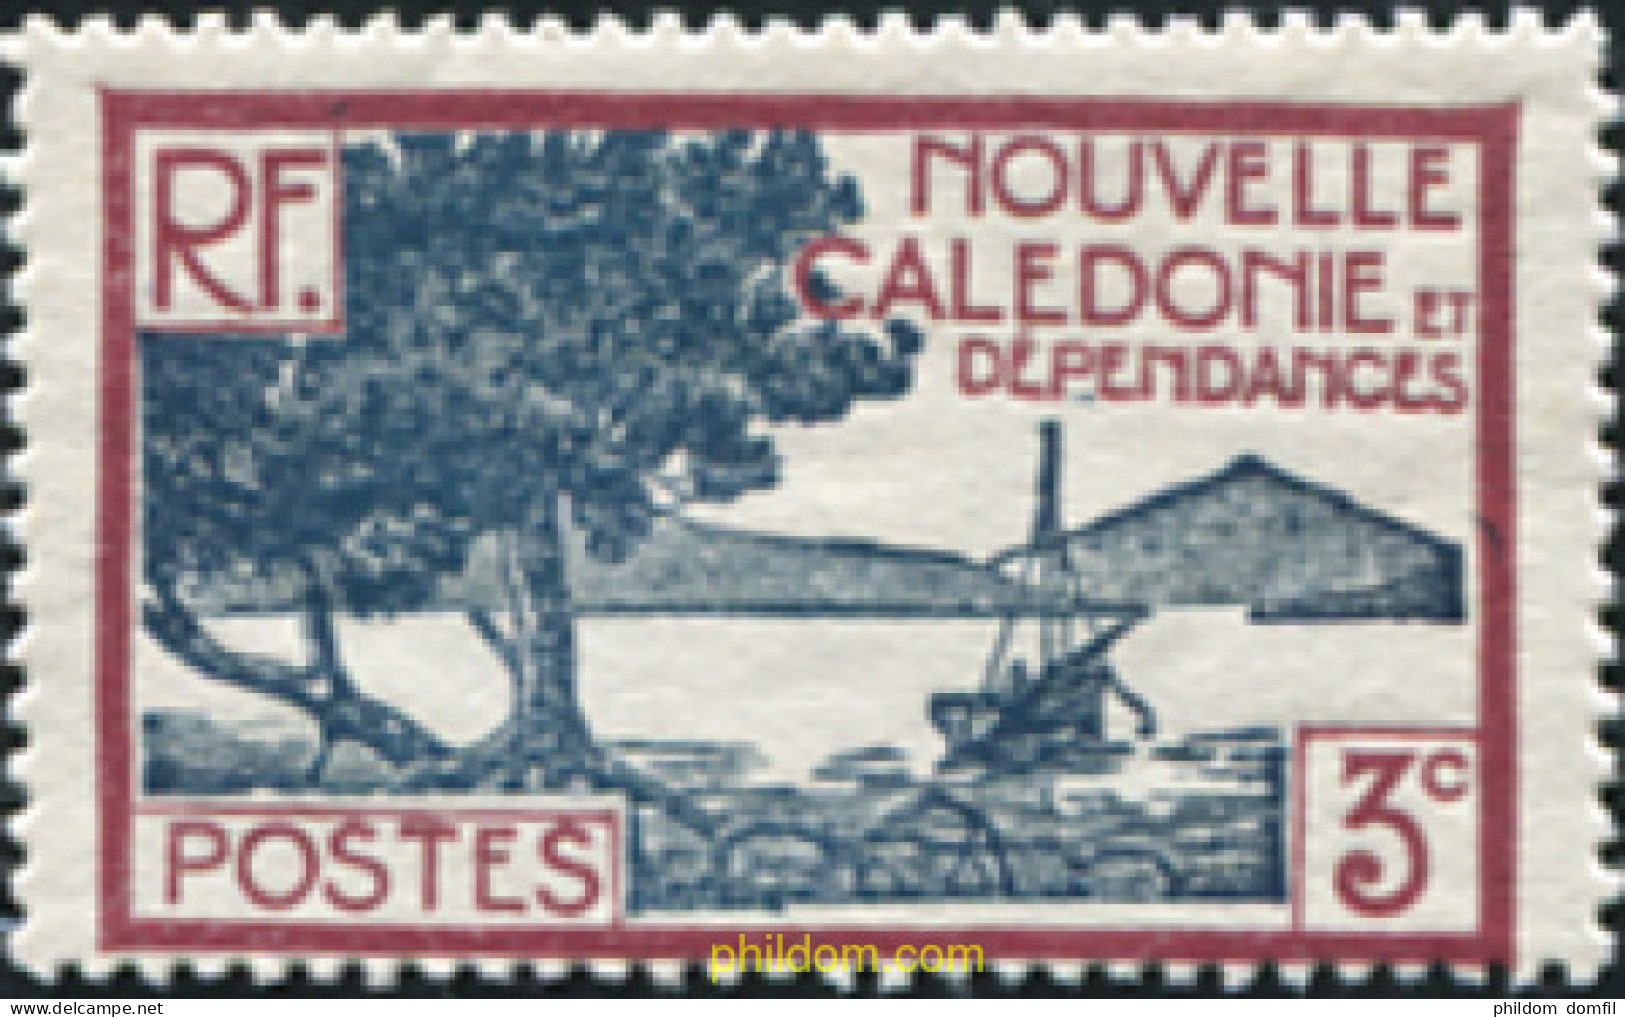 727120 HINGED NUEVA CALEDONIA 1939 SERIE BASICA - Unused Stamps